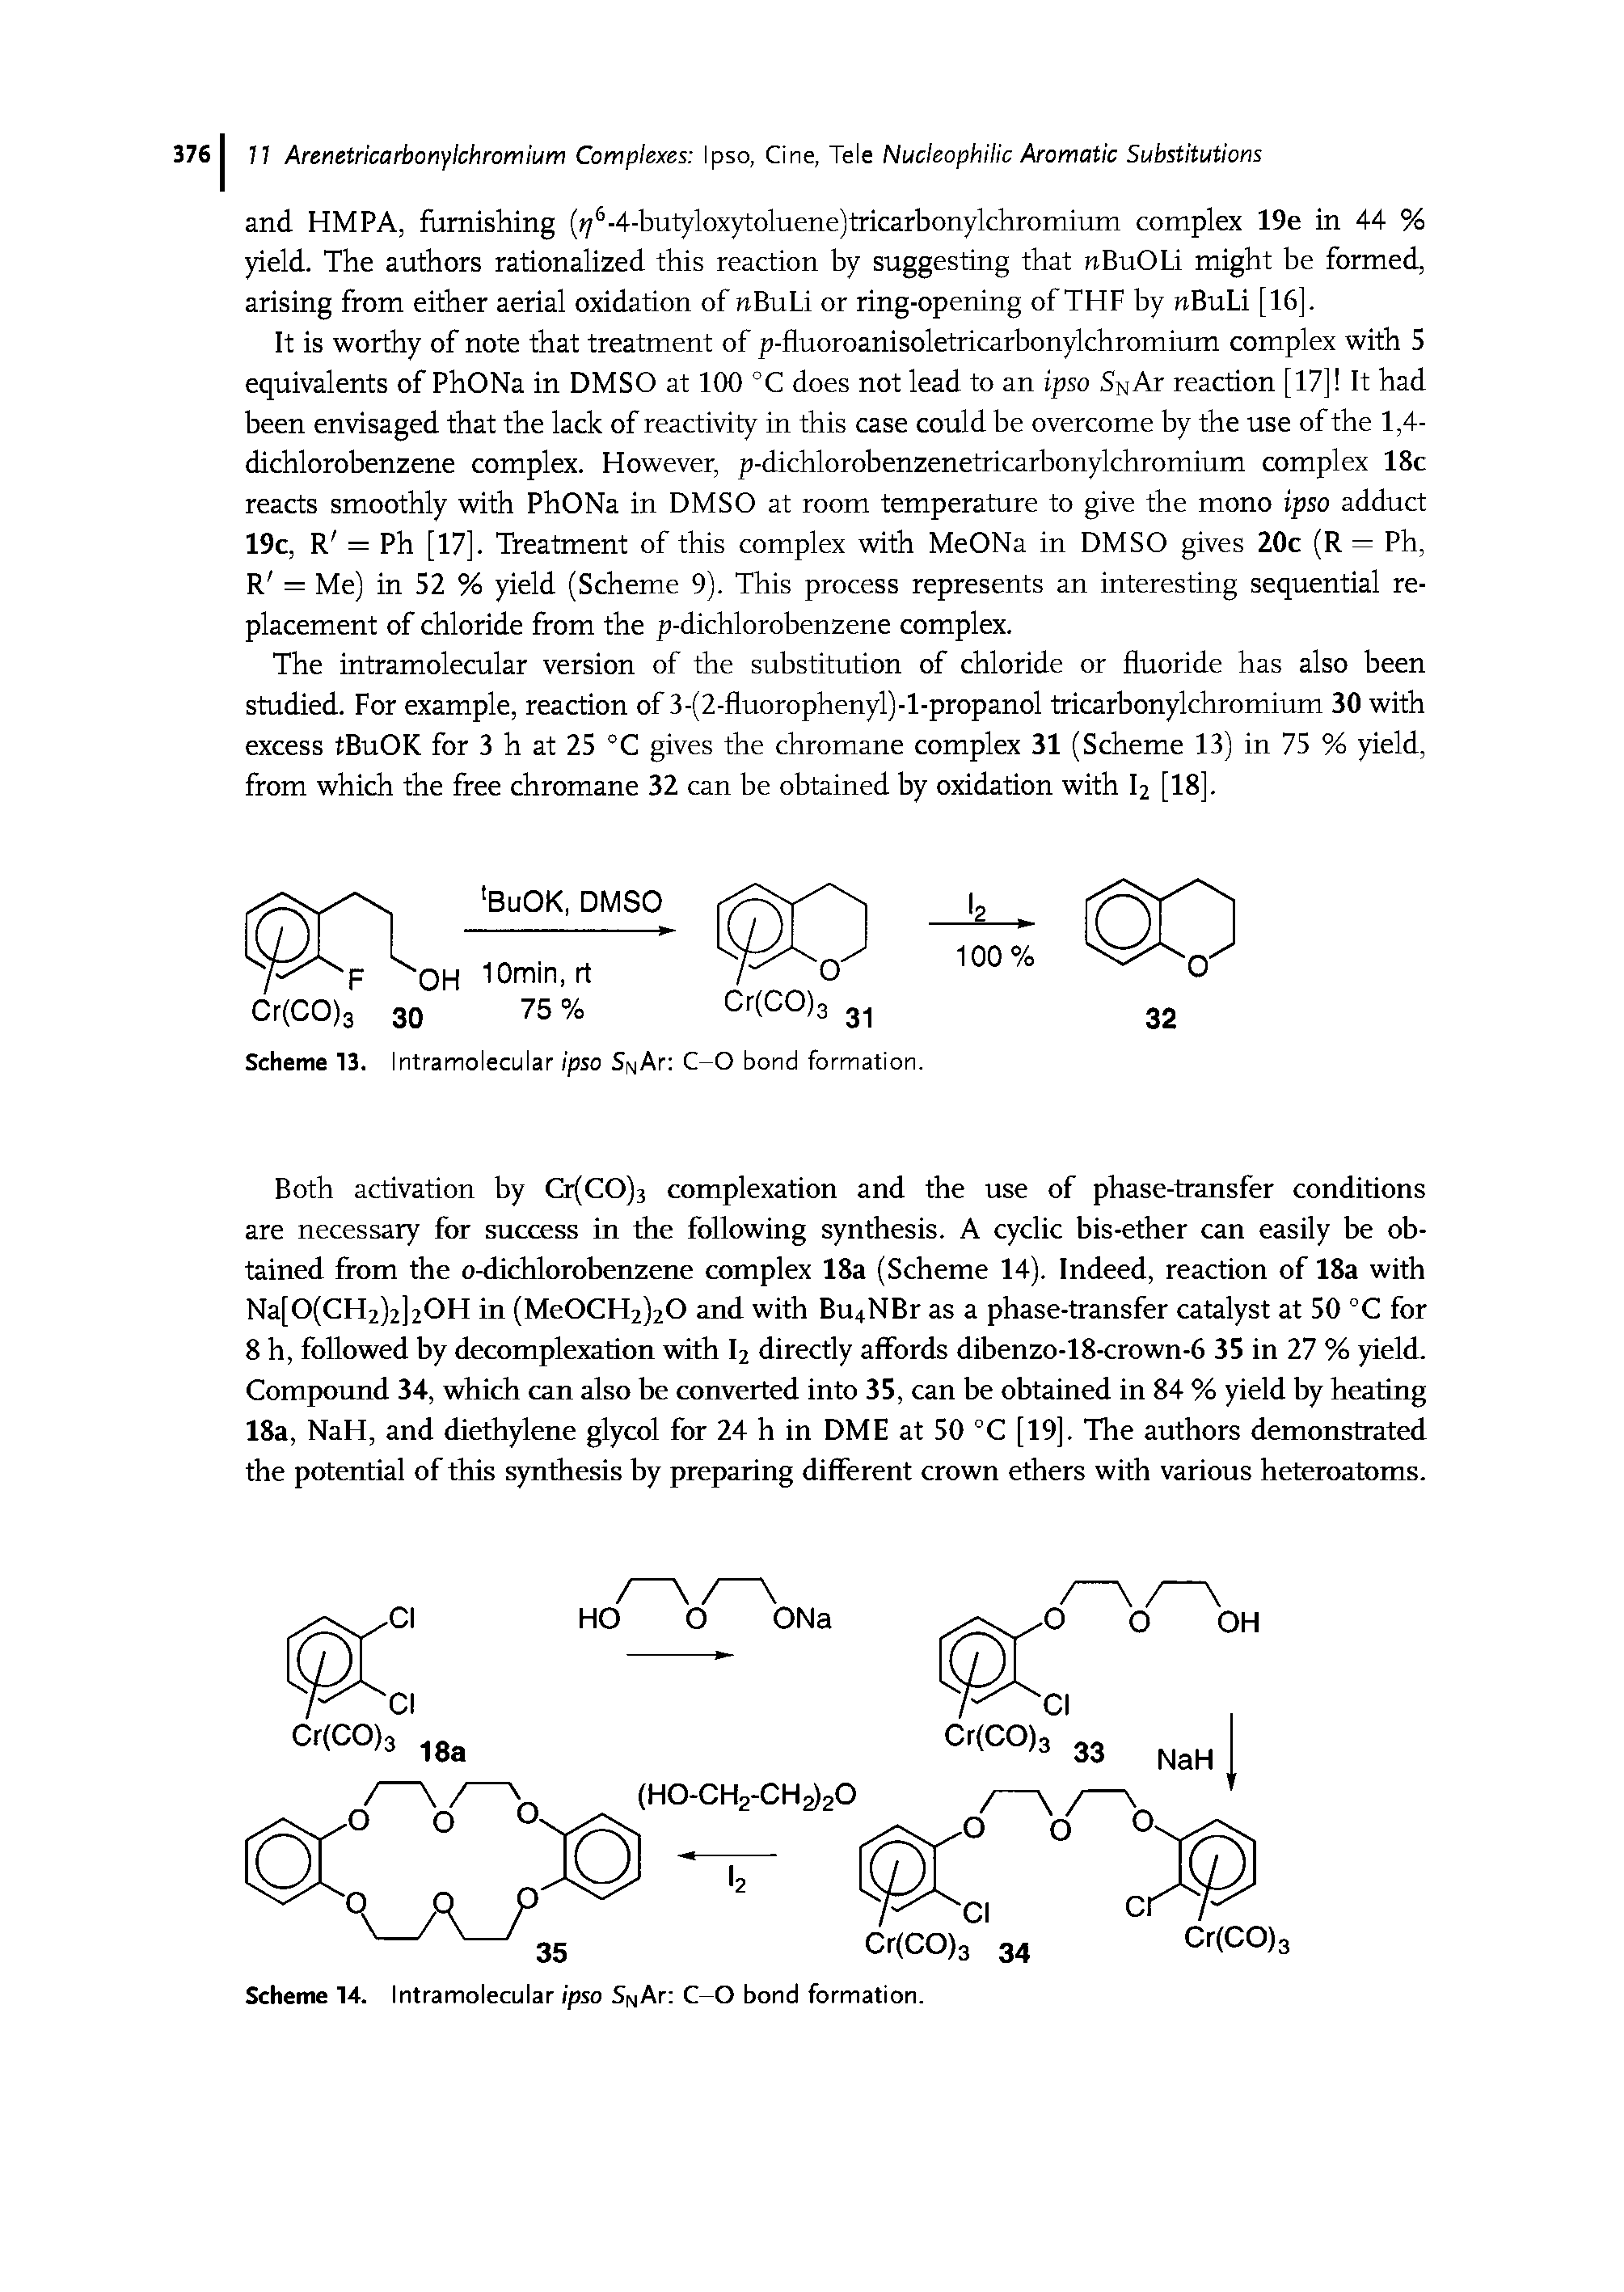 Scheme 13. Intramolecular ipso SnAr C-O bond formation.